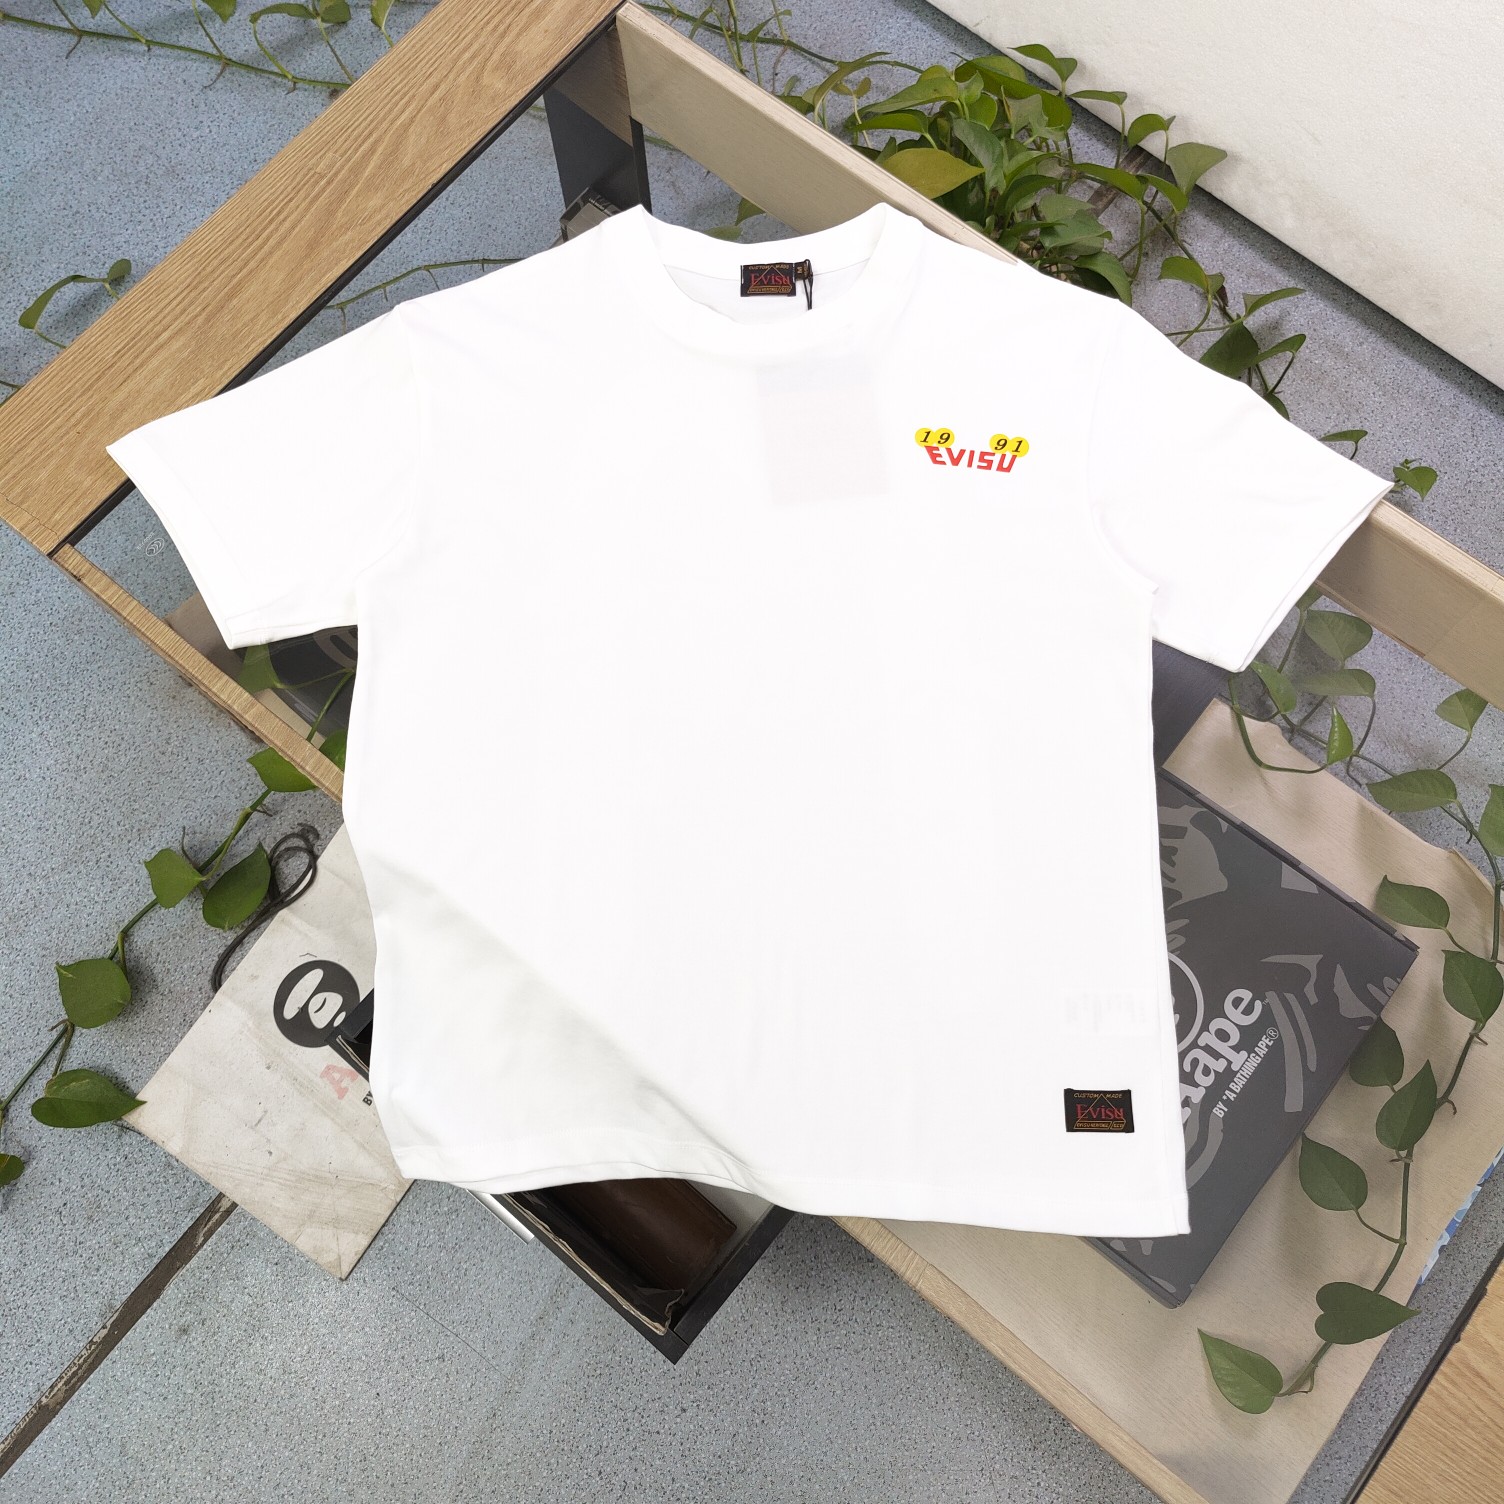 Evisu Clothing T-Shirt Black White Printing Unisex Combed Cotton Spring/Summer Collection Short Sleeve